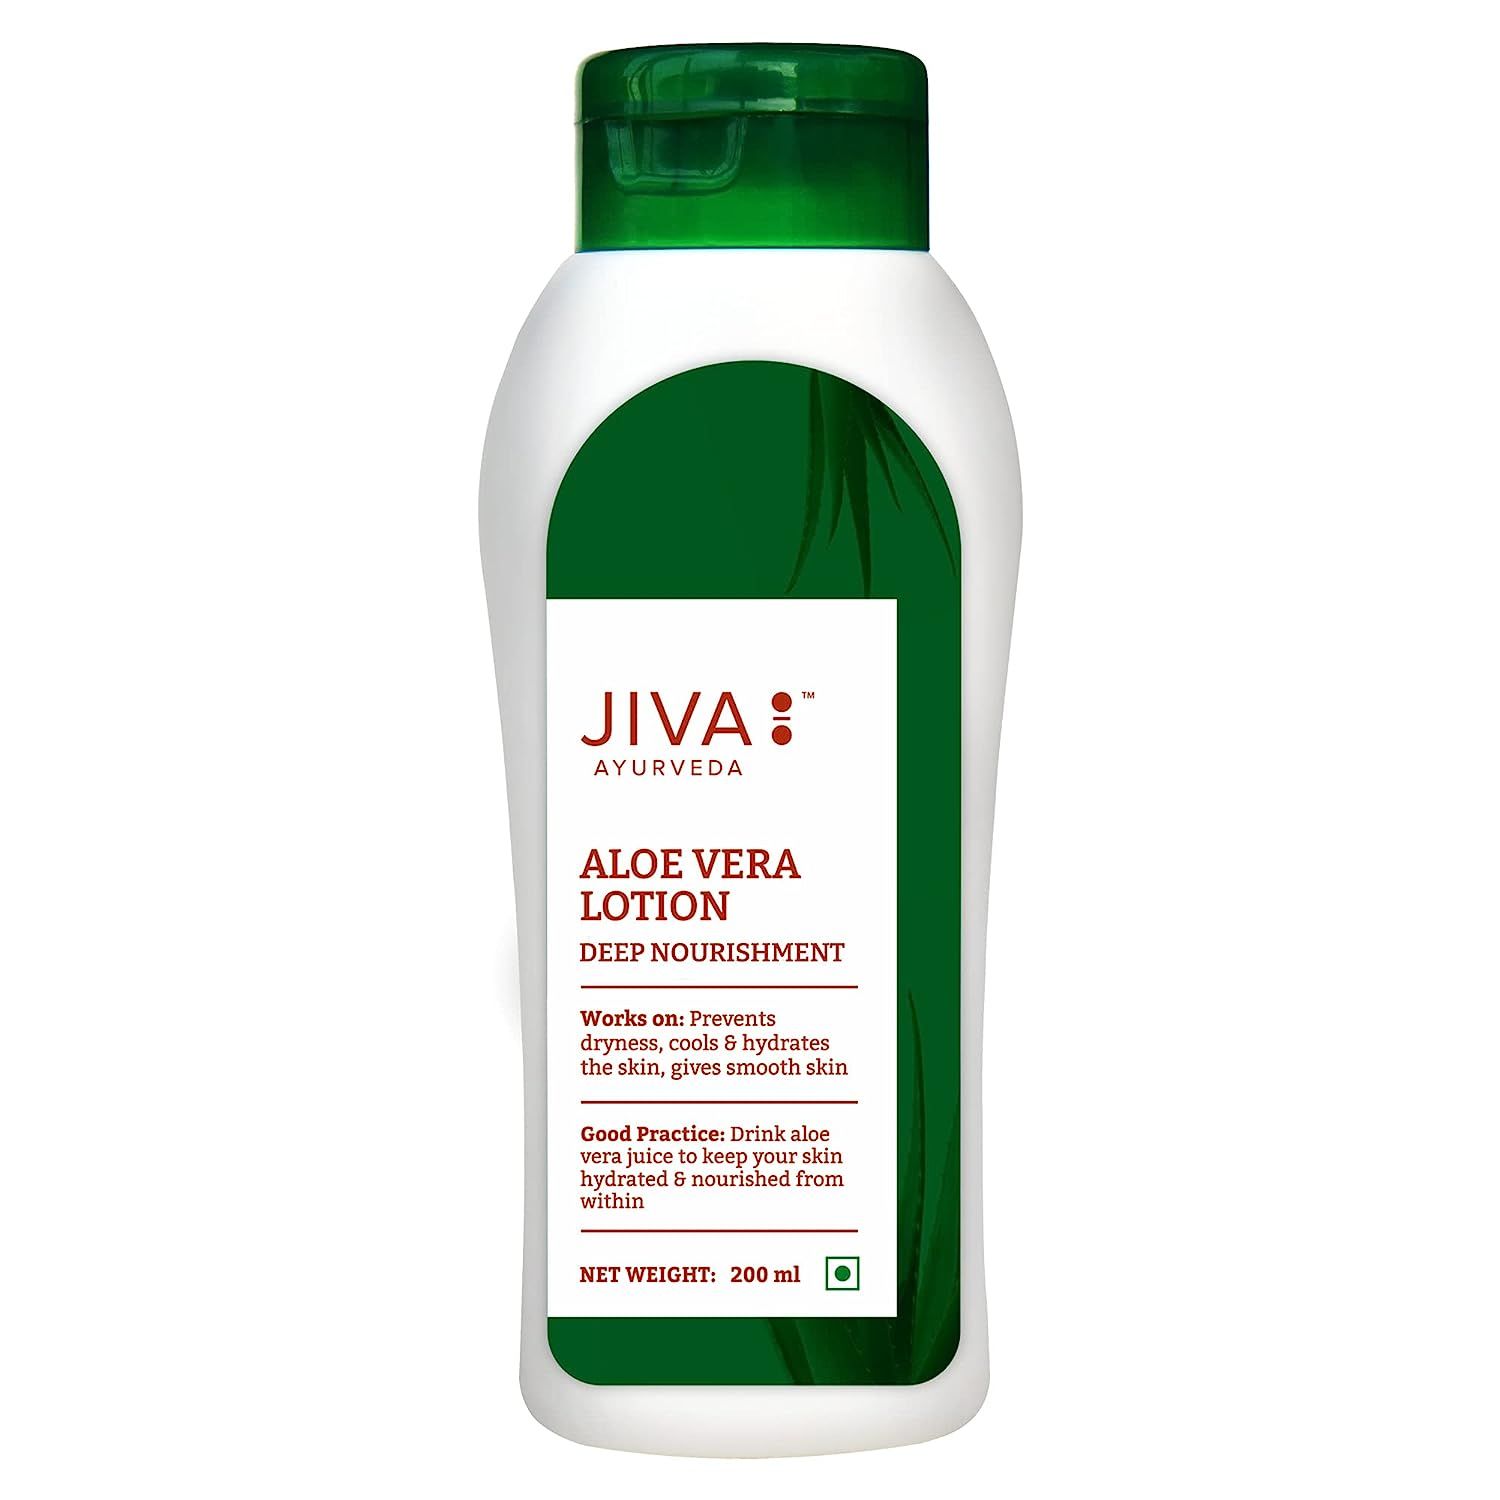 Buy Jiva Ayurveda Aloevera Lotion at Best Price Online